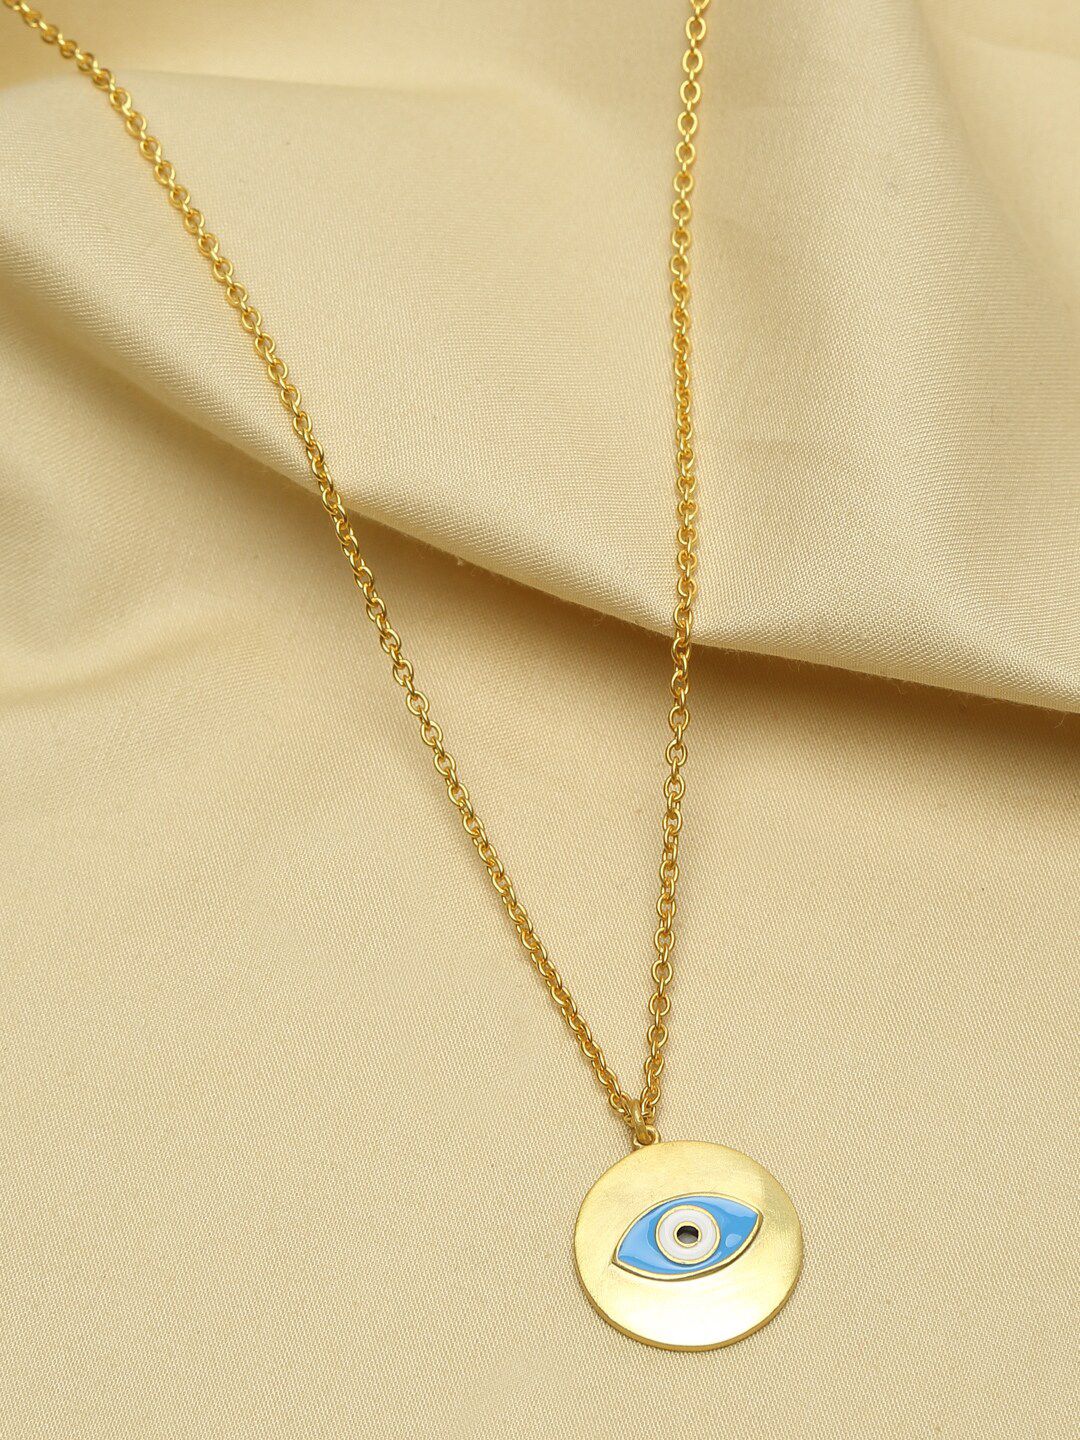 EK BY EKTA KAPOOR Women 22K Gold-Toned Evil Eye Pendant Necklace Price in India